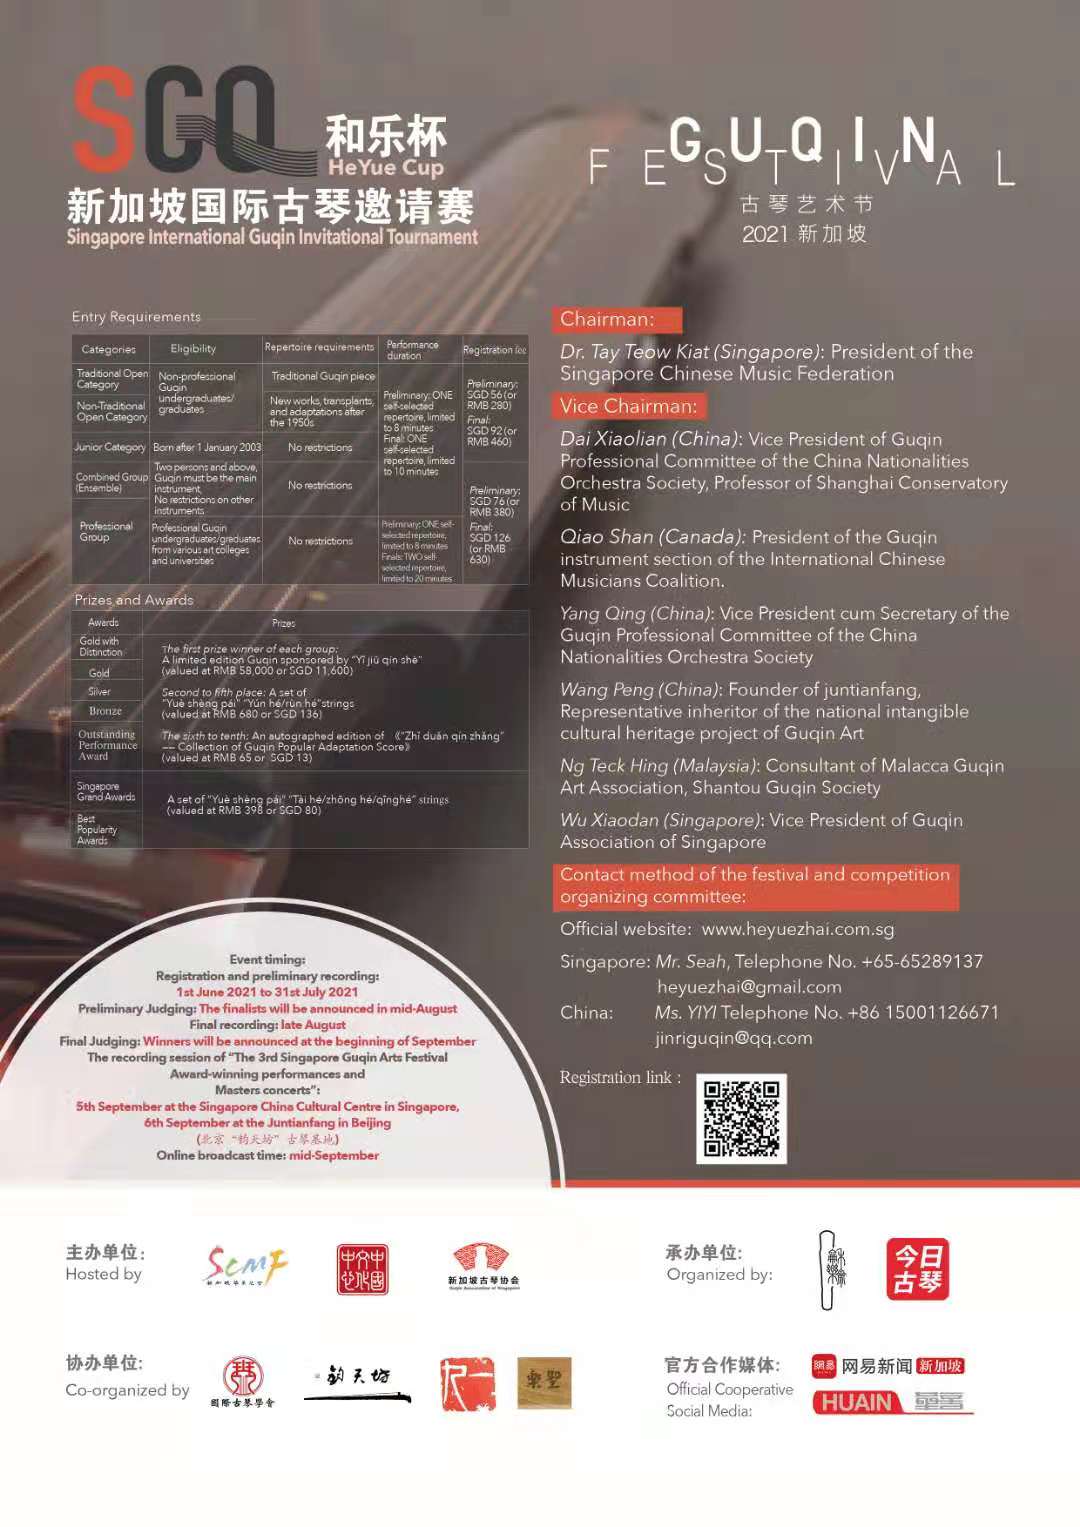 The 3rd Singapore Guqin Arts Festival cum The 1st Singapore International Guqin Invitational Tournament